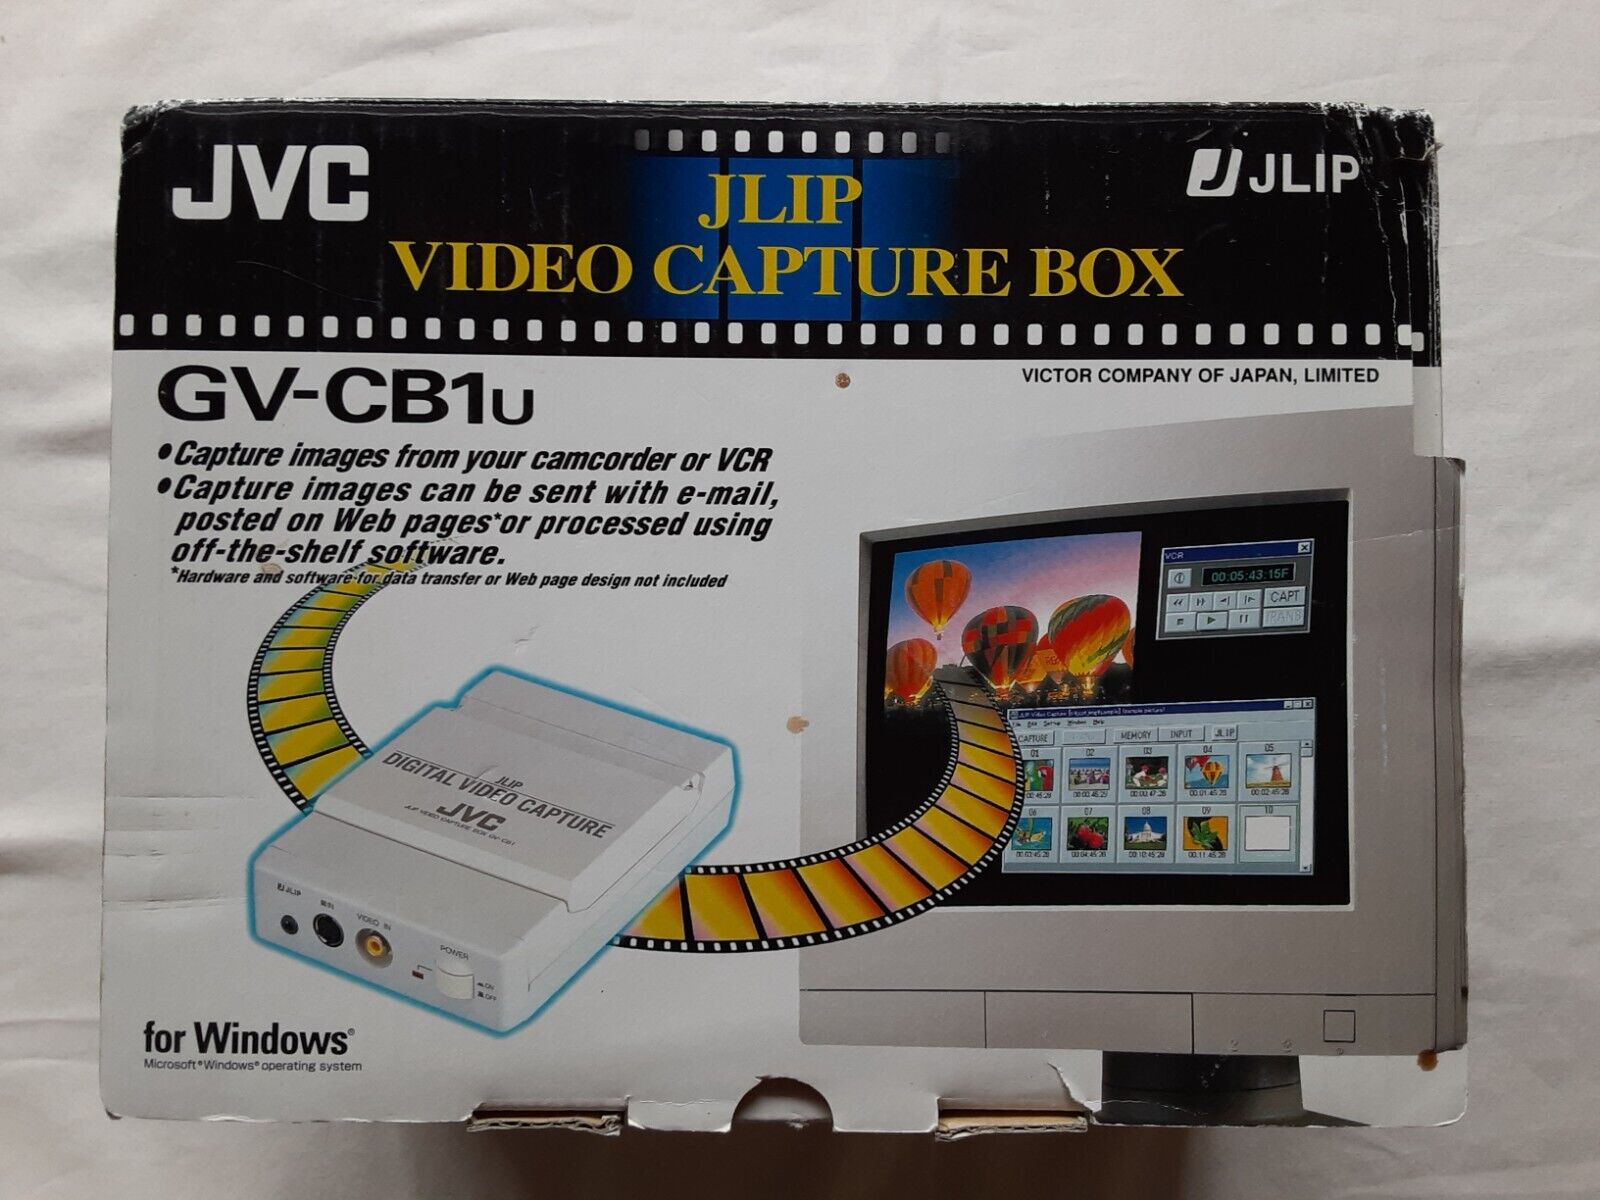 JVC JLIP Video Capture Box GV-CB1U for Windows 3.1 or 95 VINTAGE NEW